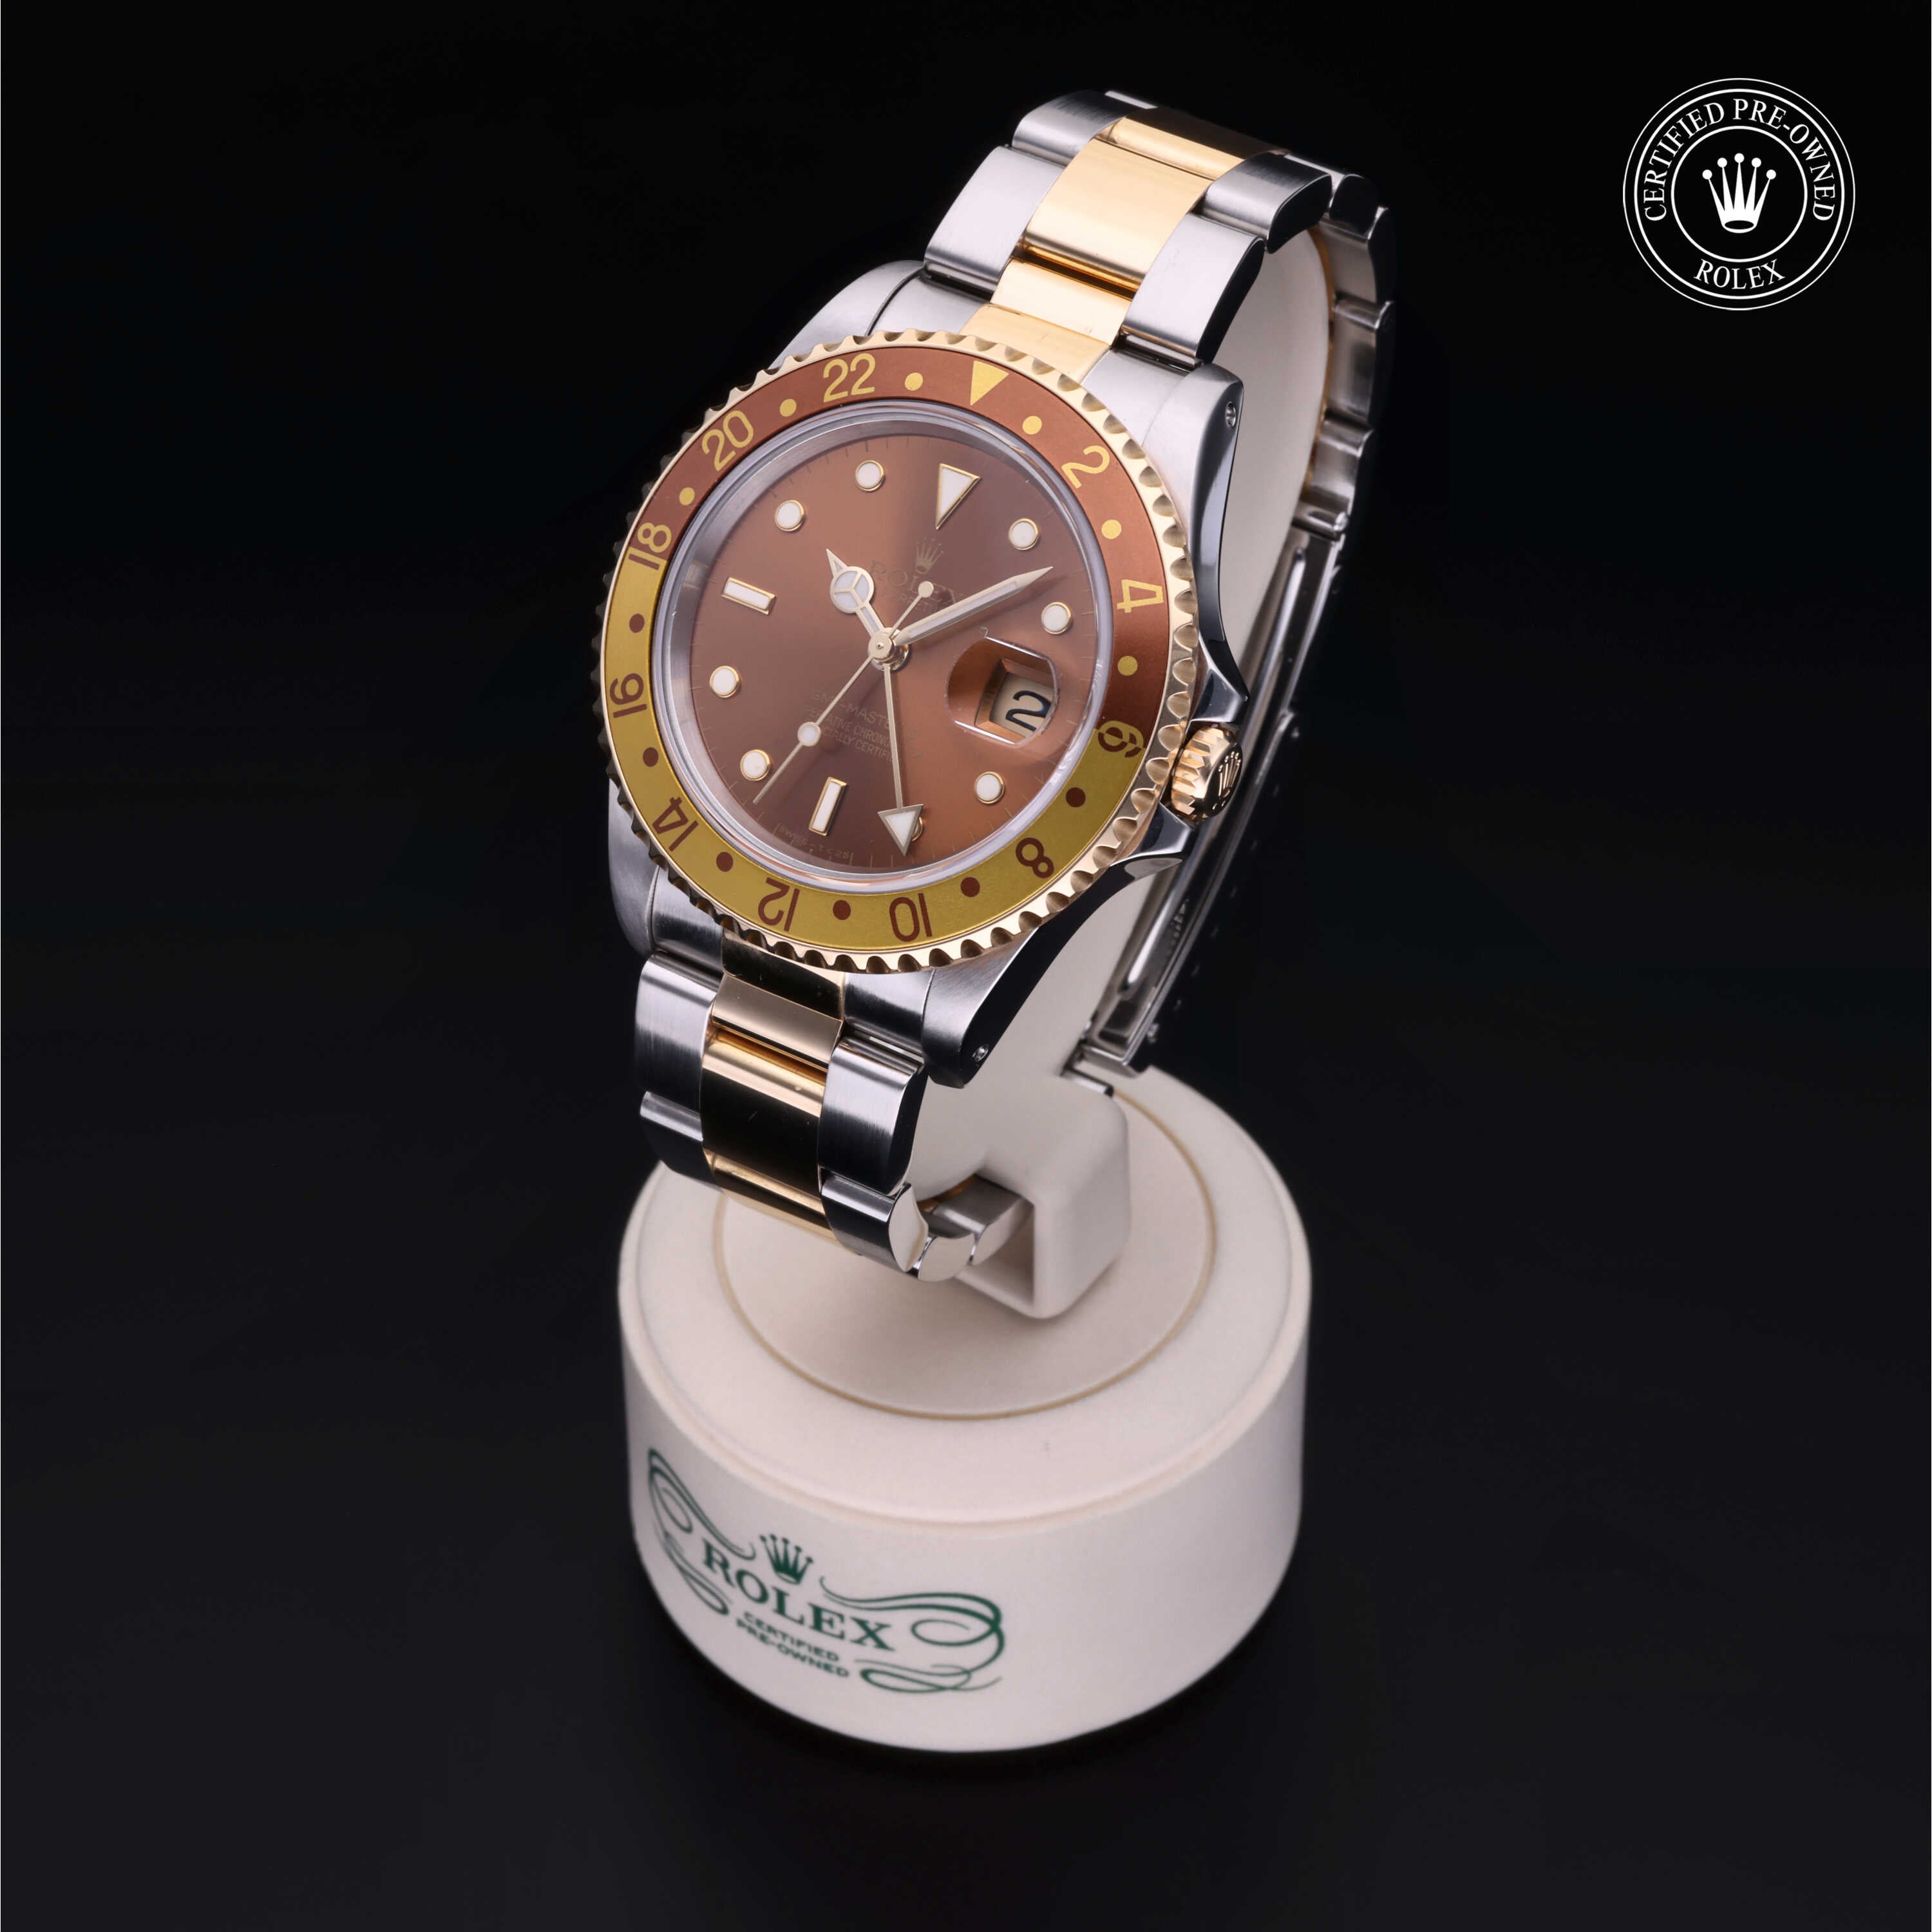 Rolex watches at Schwanke-Kasten Jewelers in Milwaukee, Wisconsin